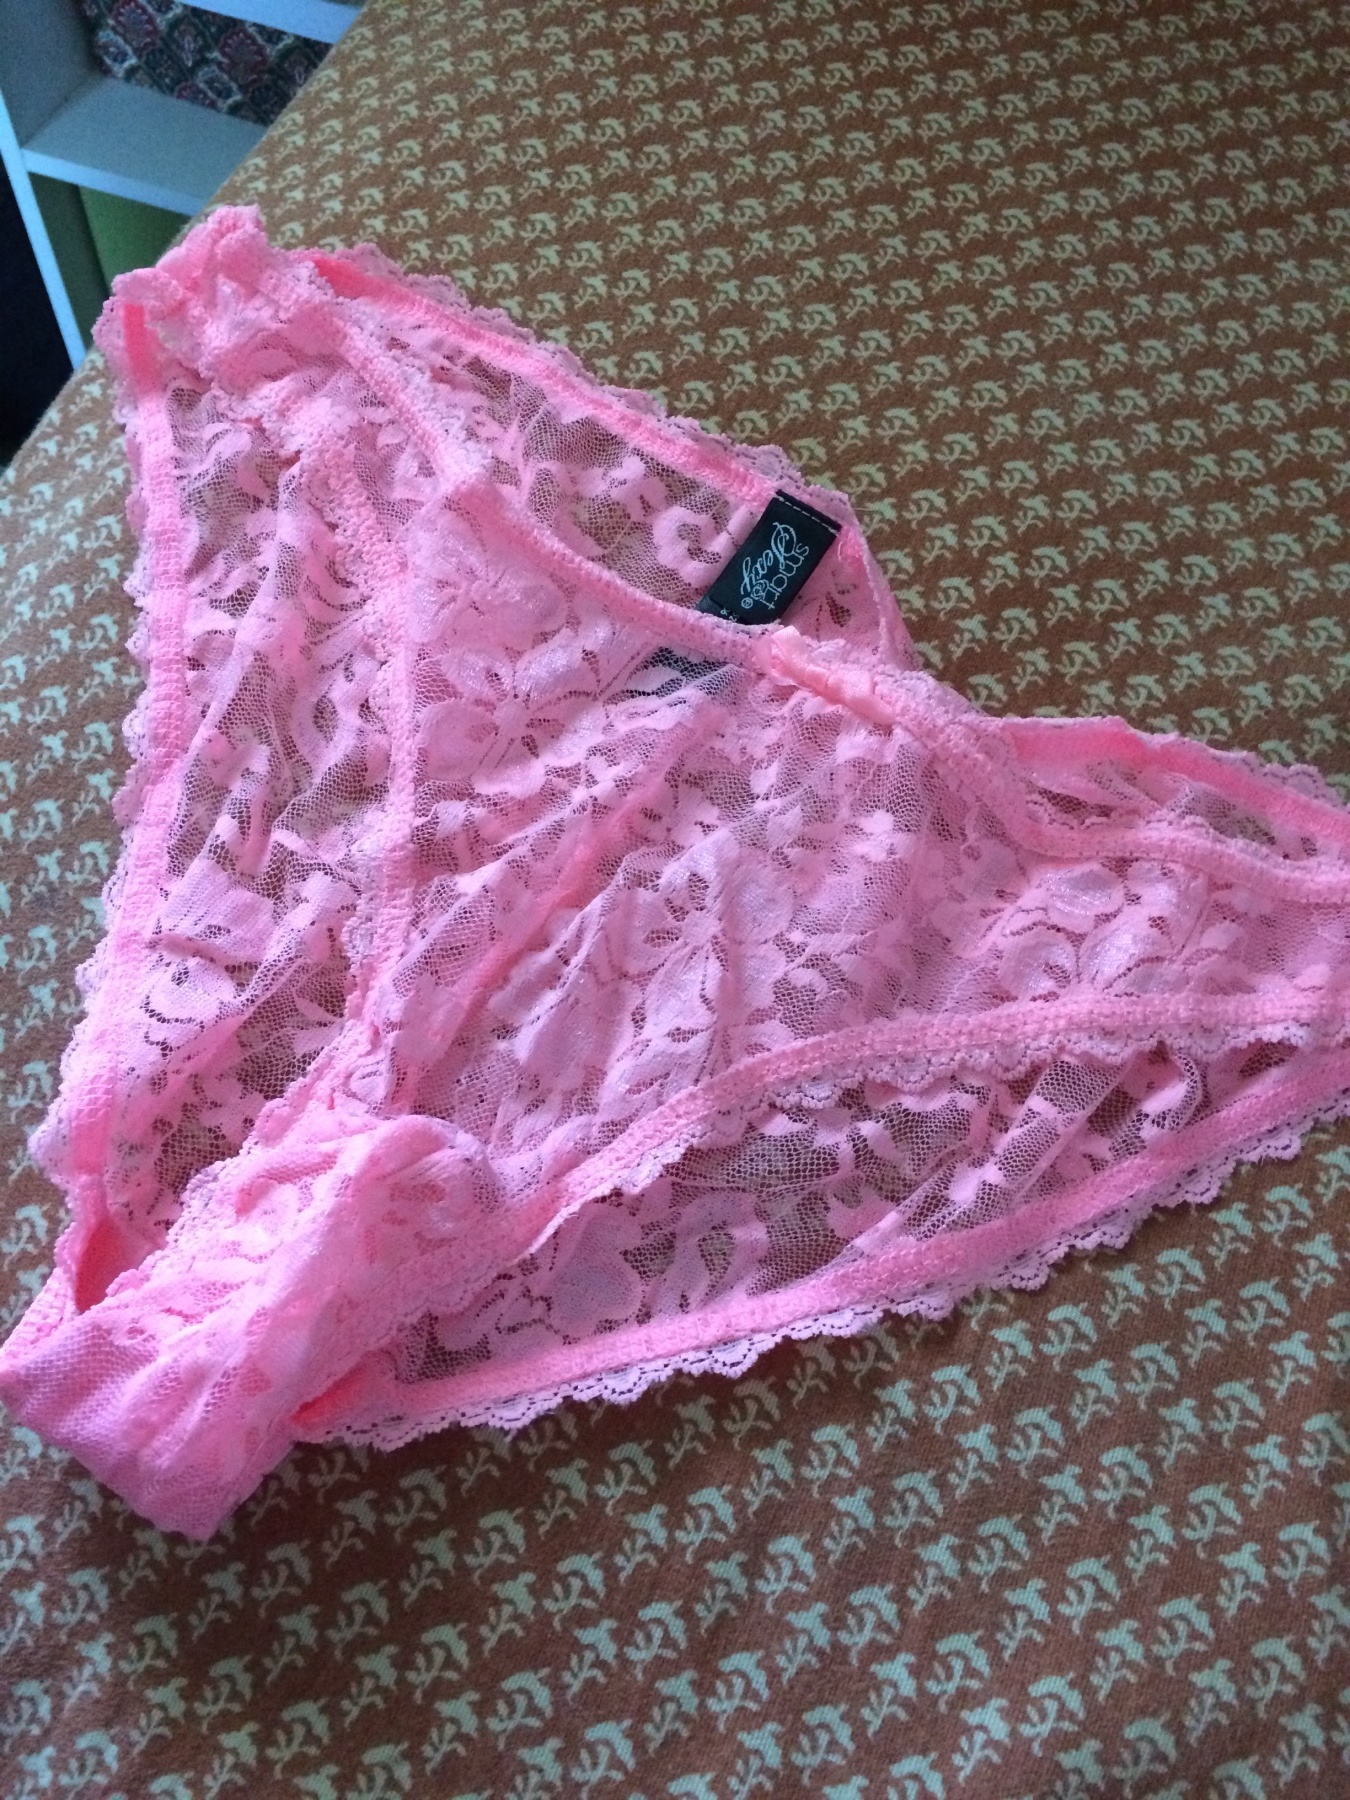 Pink Lace Panties